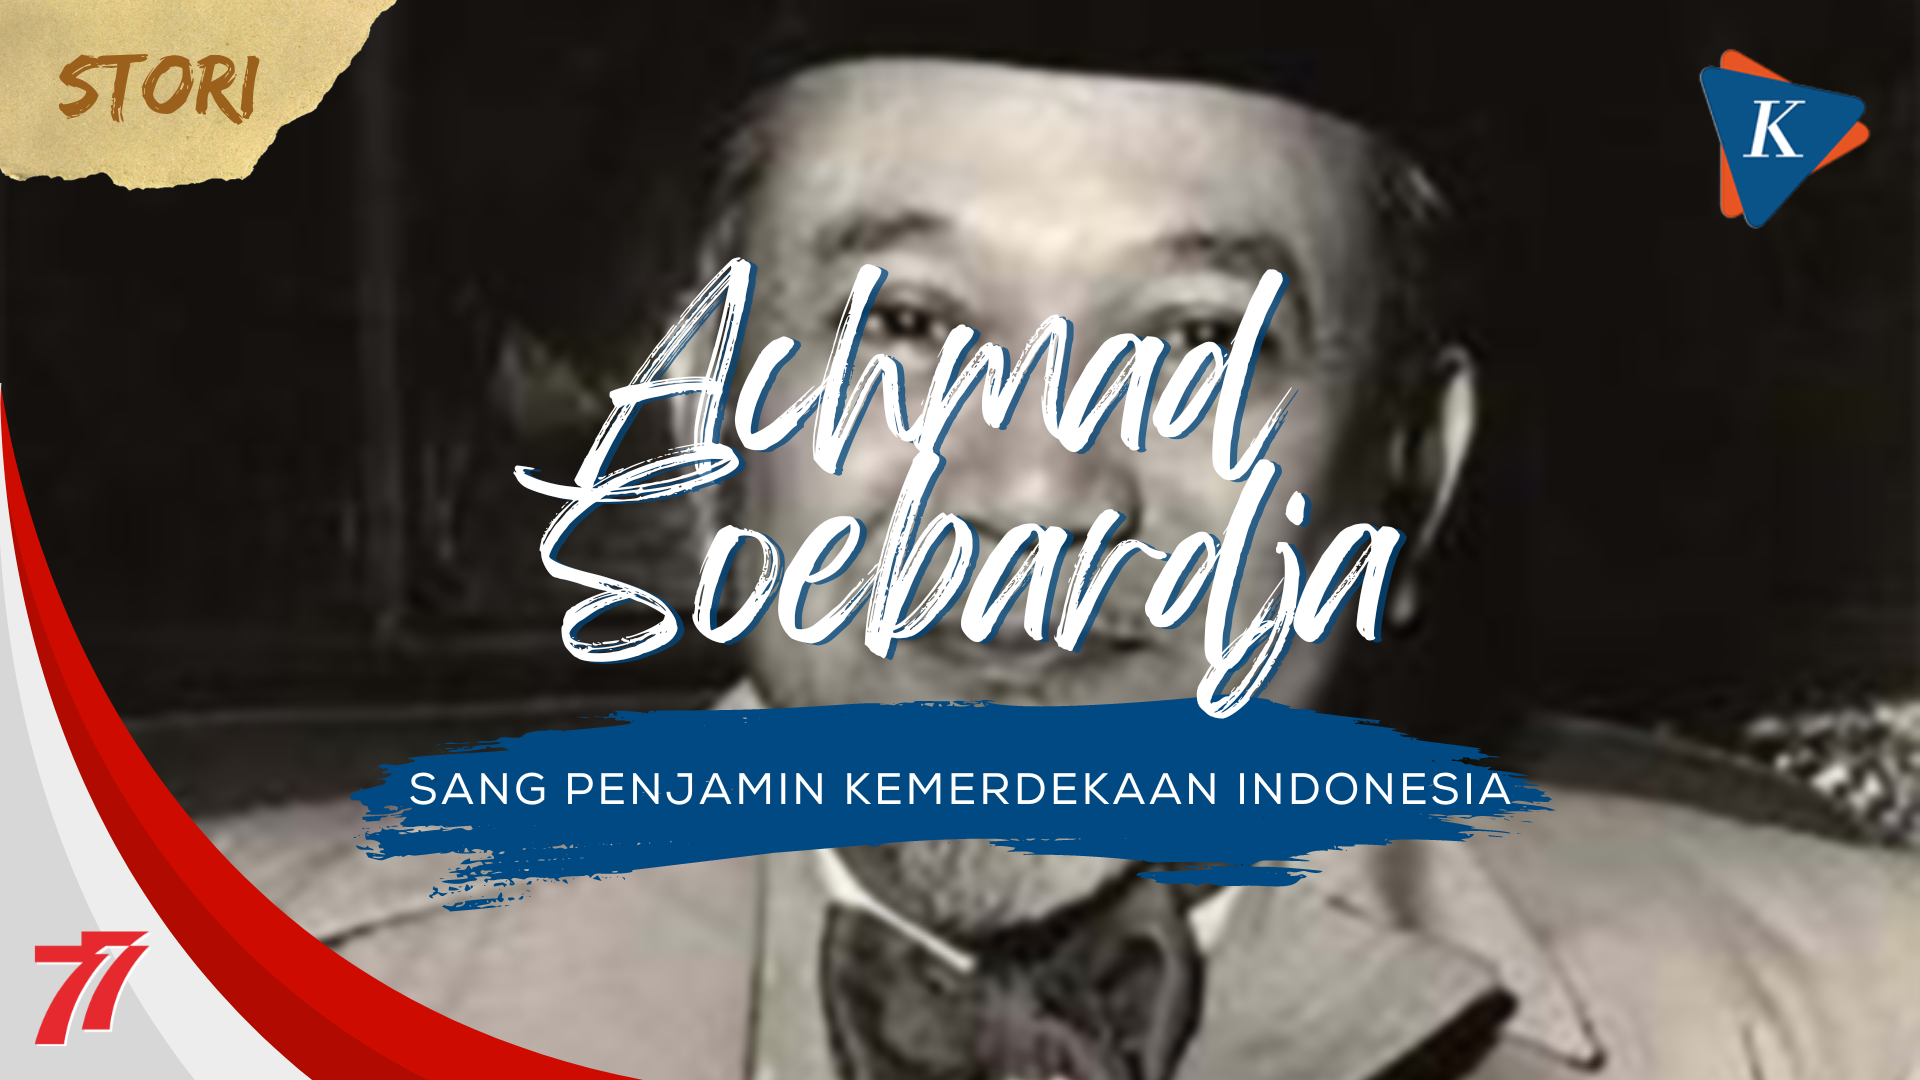 Achmad Soebardja, Sang Penjamin Kemerdekaan Indonesia